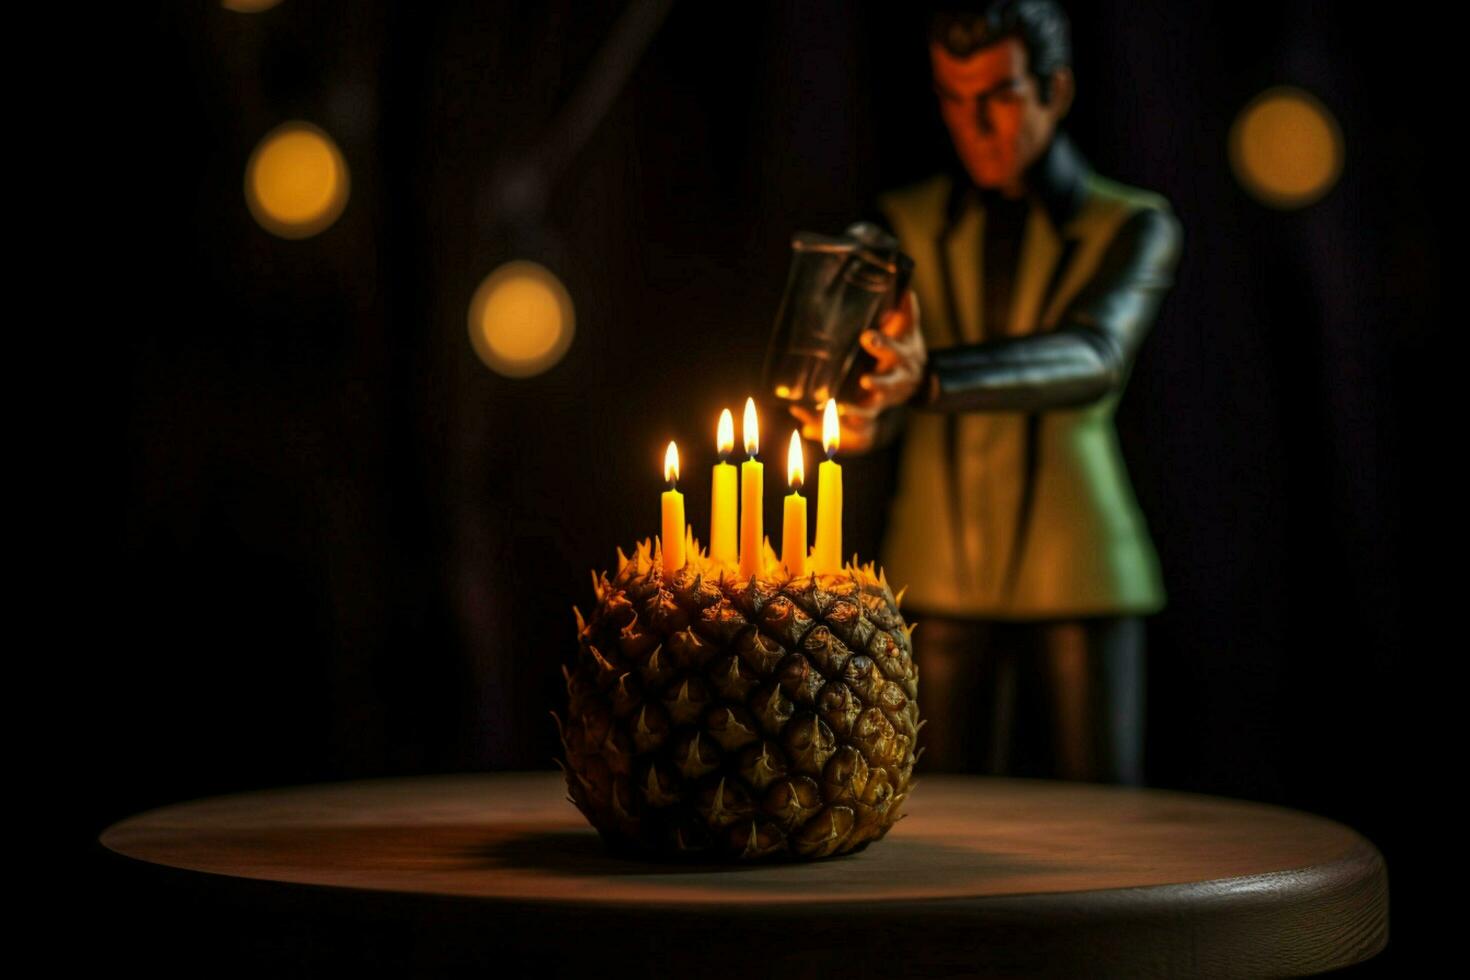 birthday cake shaped like Mister Spock holding a pi photo